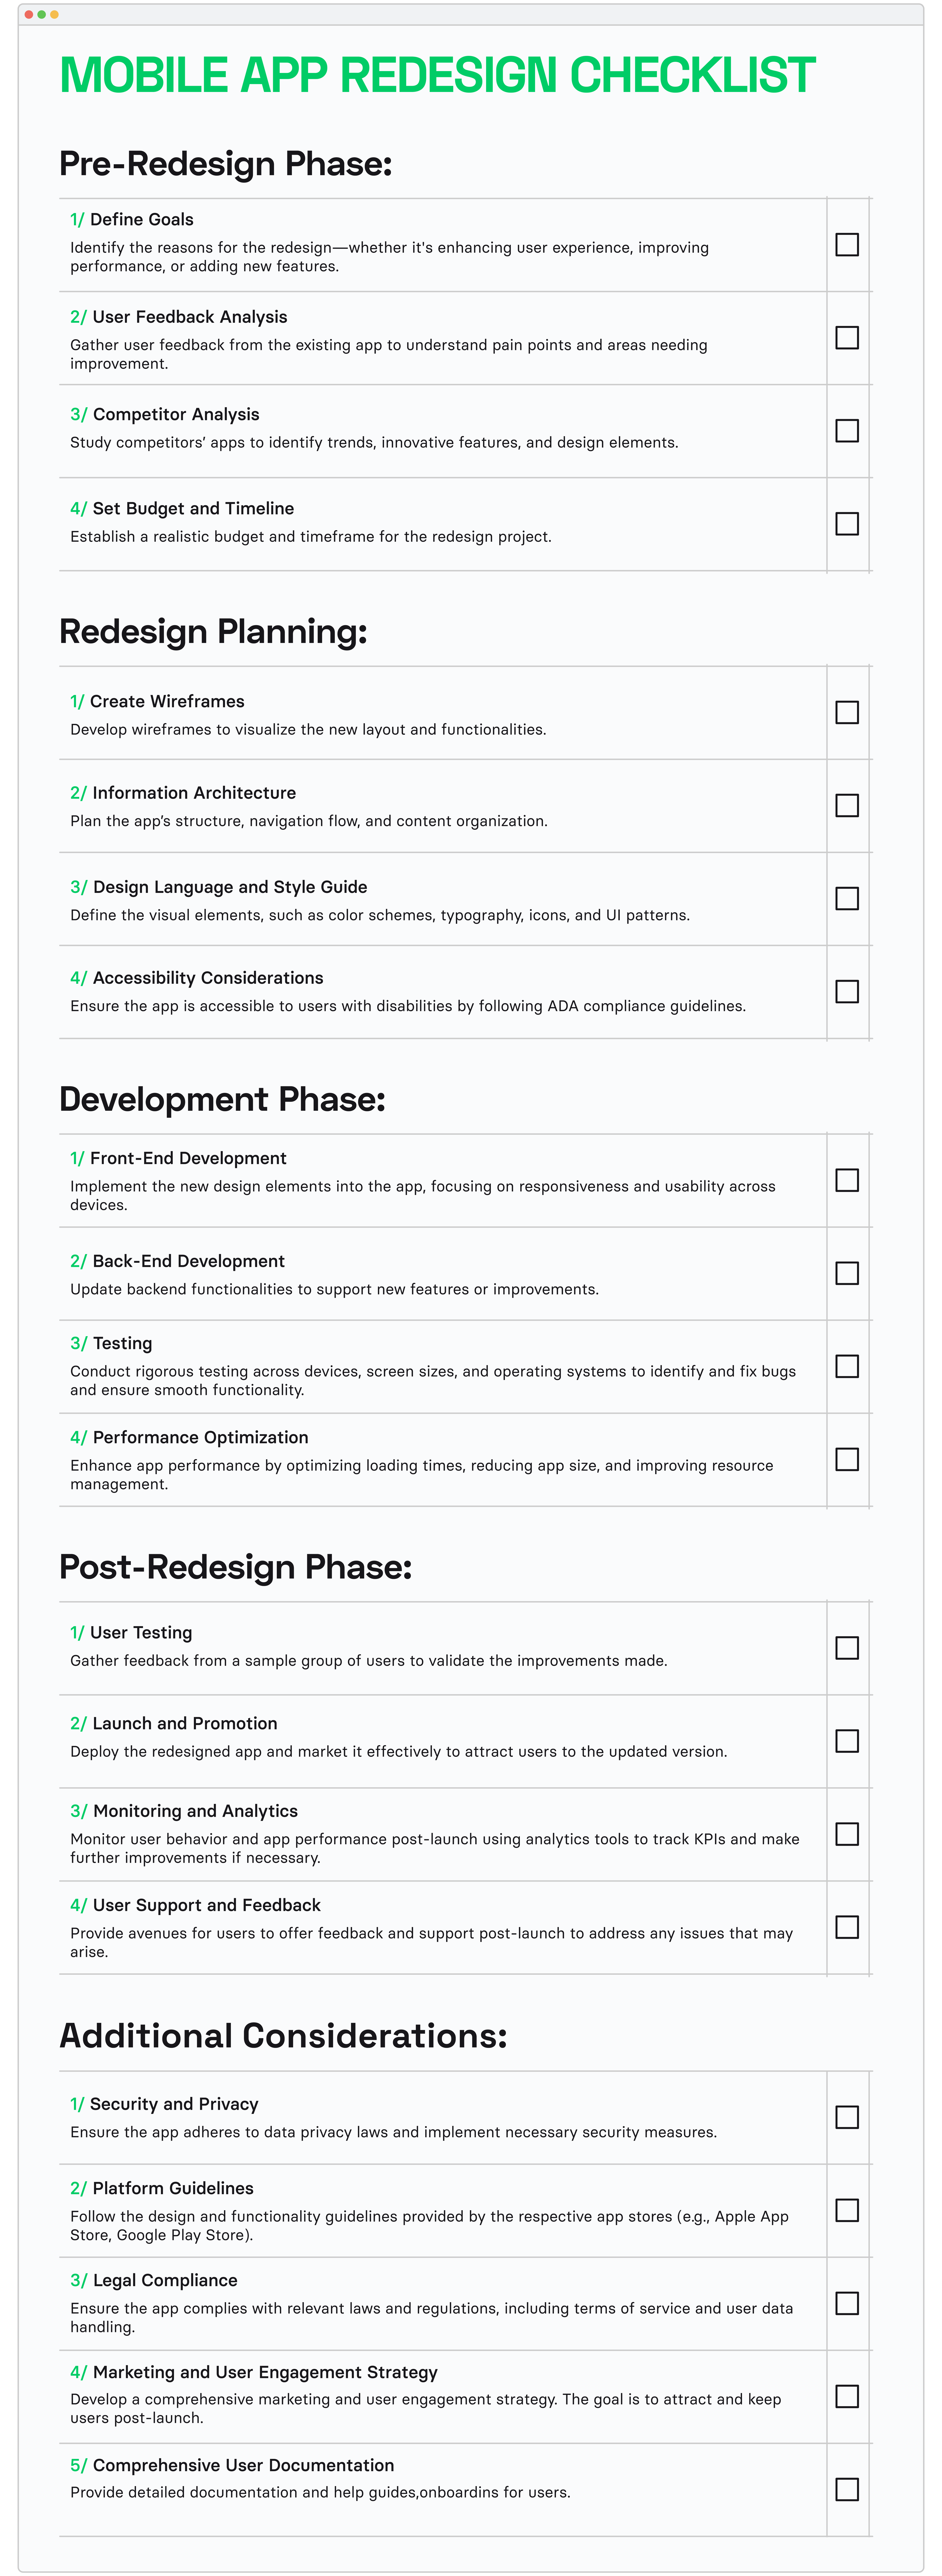 Mobile app redesign checklist (customizable template)
